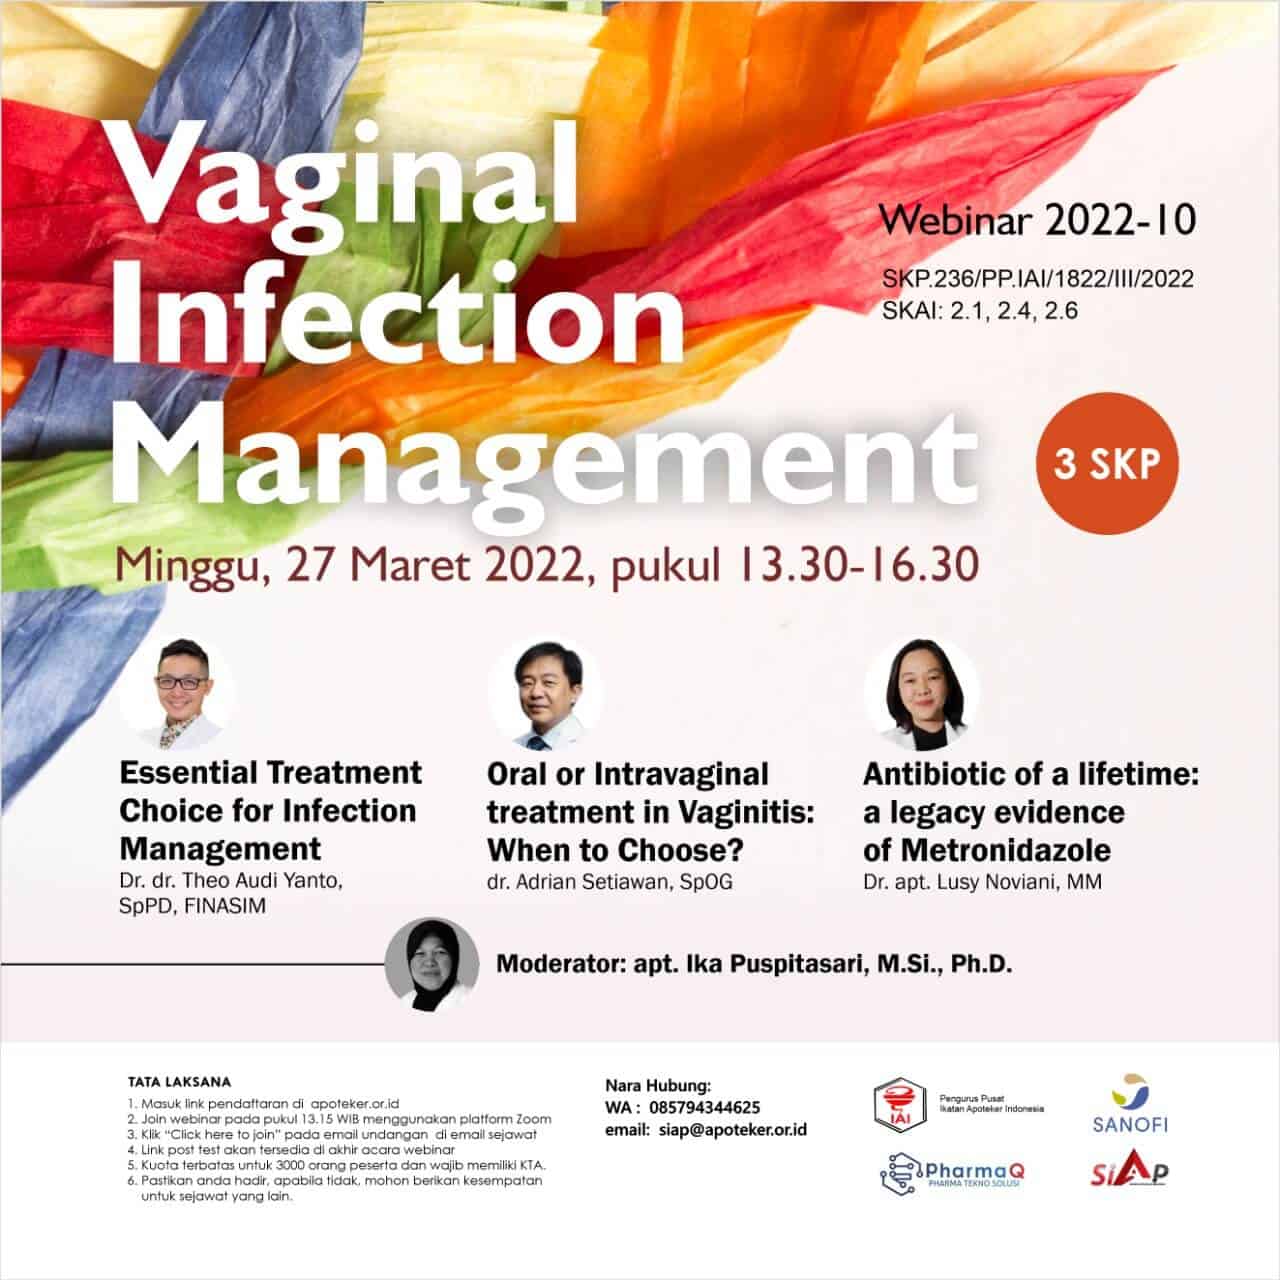 Kunci Jawaban Webinar Vaginal Infection Management [Webinar 2022-10]